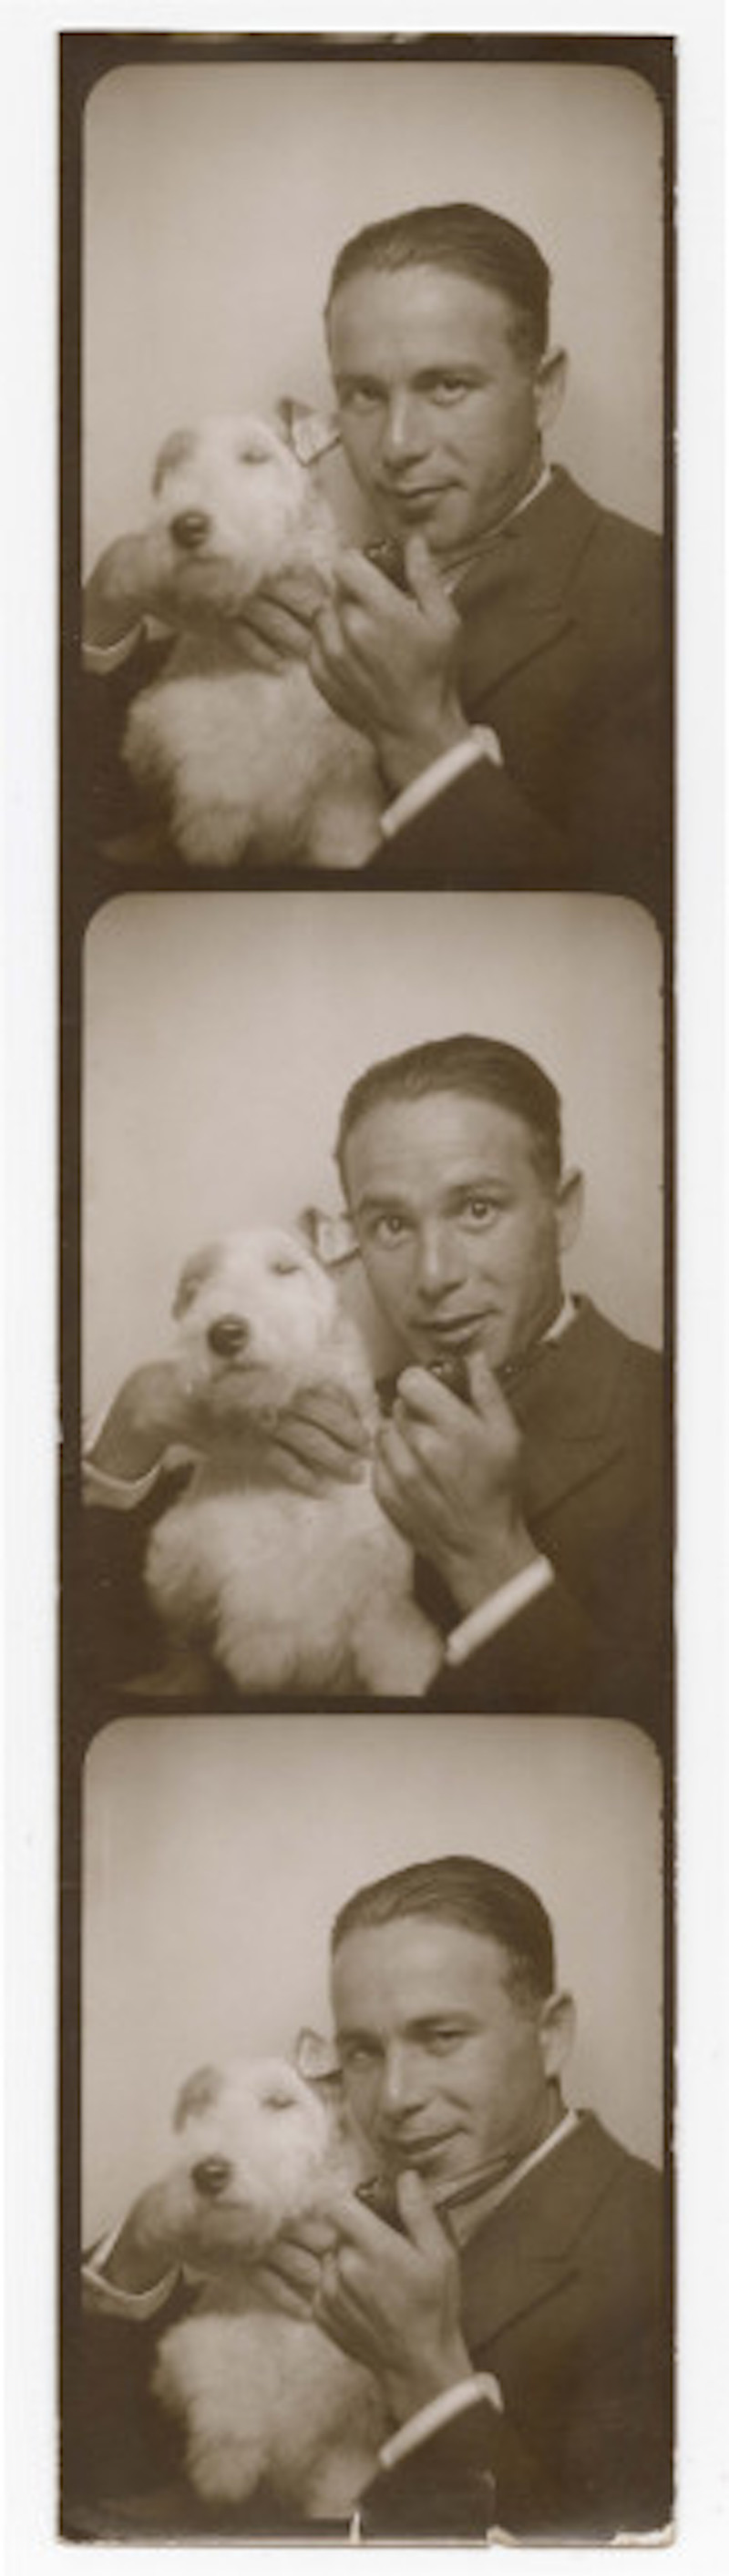 Self-portrait of Anatol Josepho with Terrier